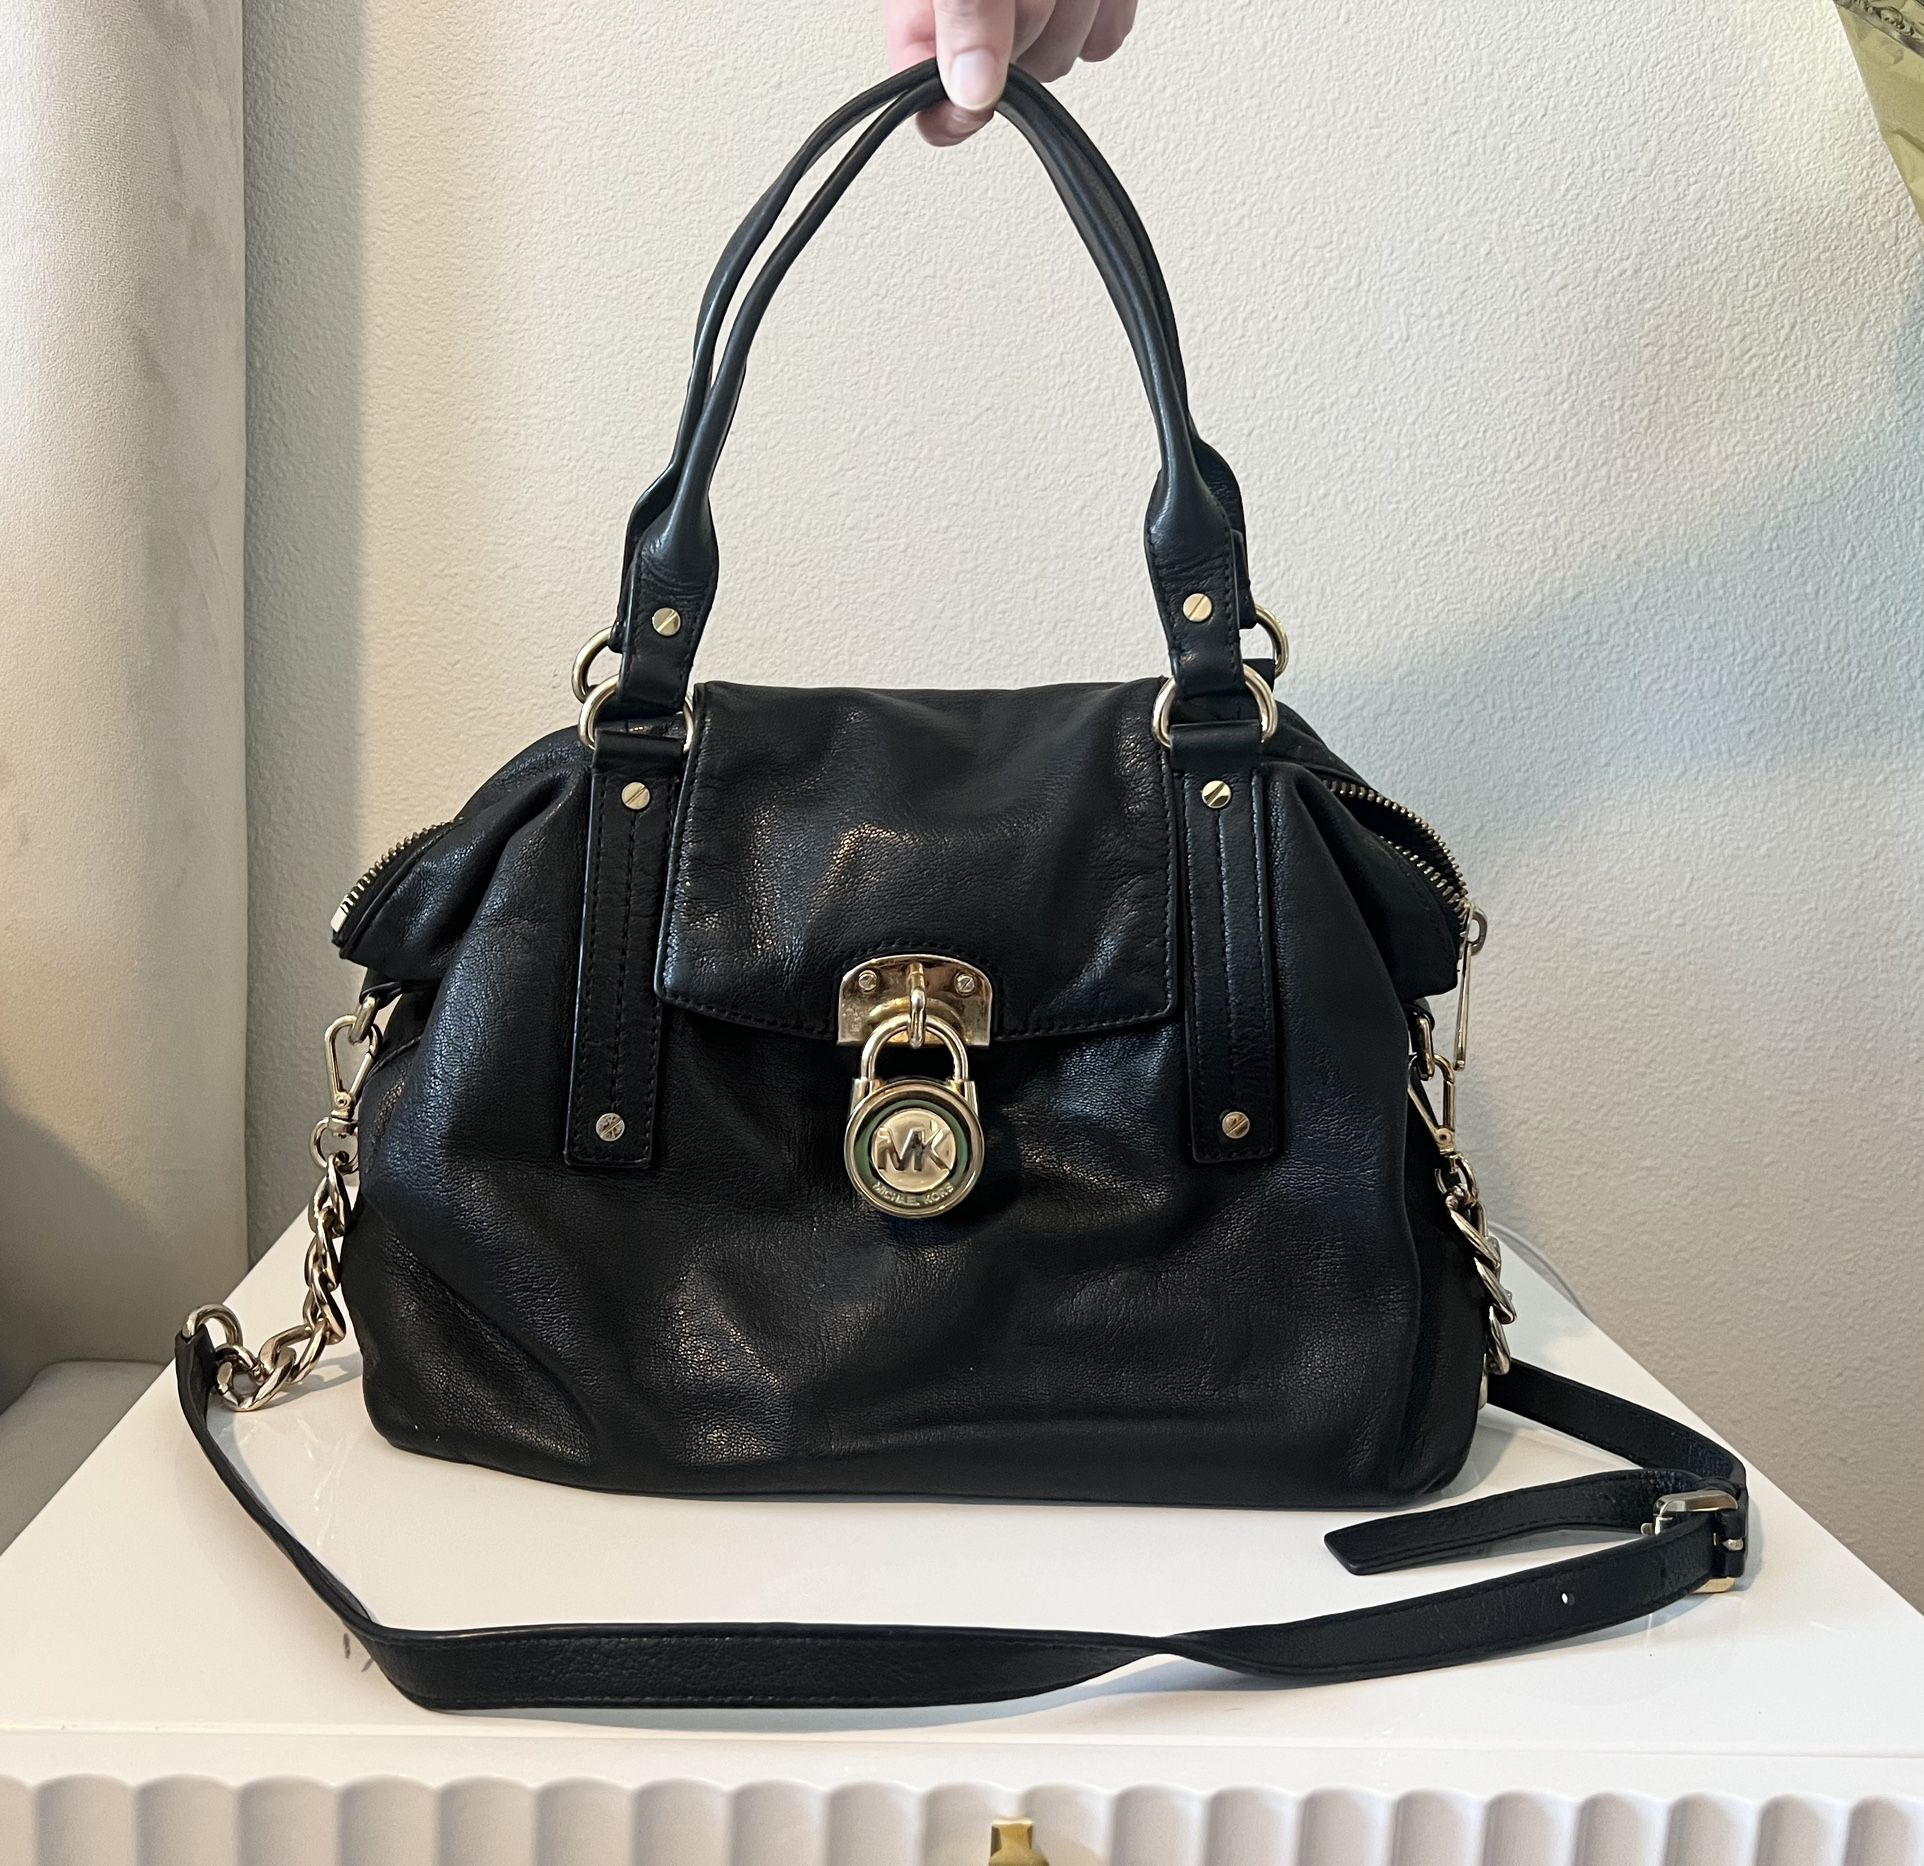 Michael Kors Slouchy Satchel Leather Bag Purse Woman’s Black Retail Price 358$